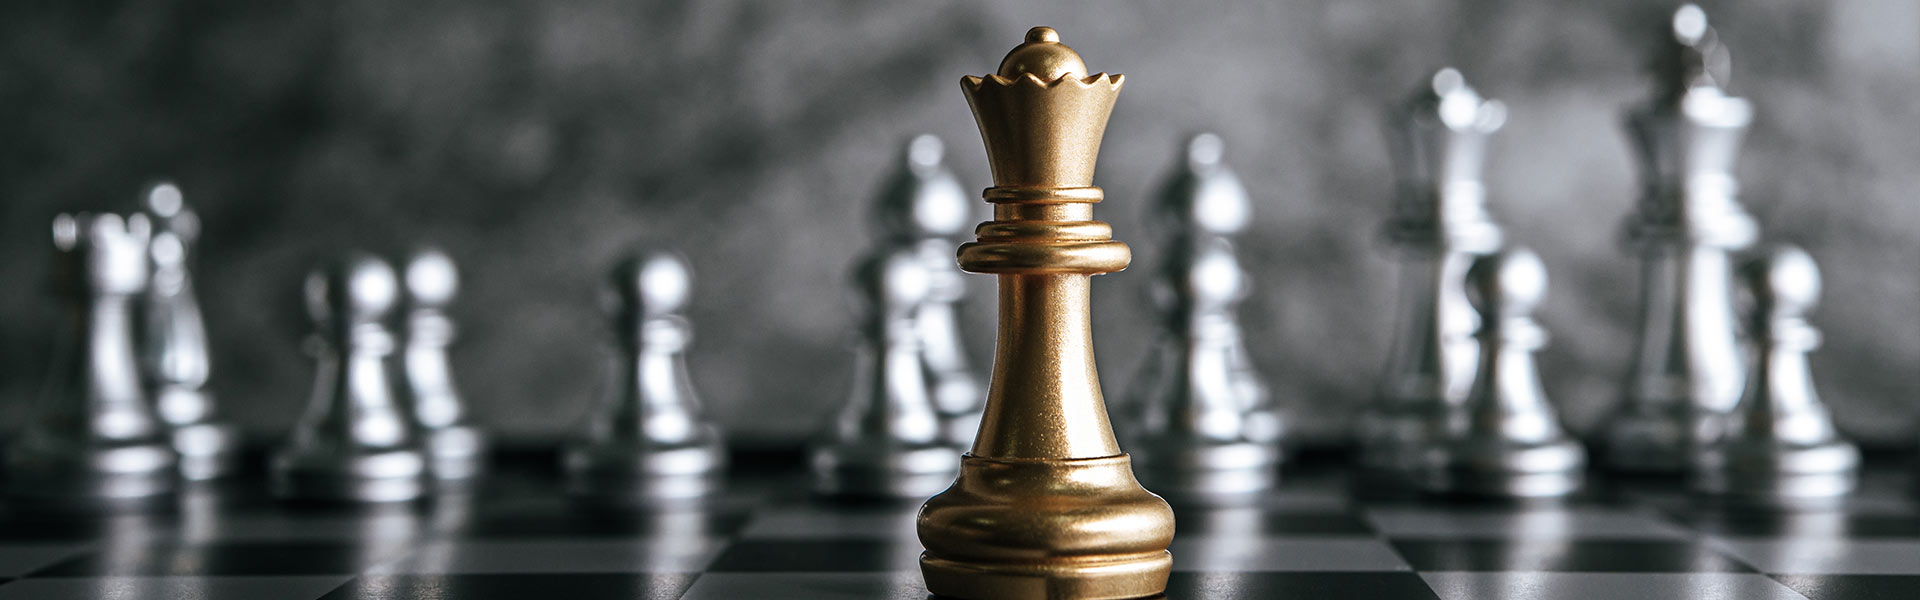 Škola šaha Hrvatska | Chess Lessons UK